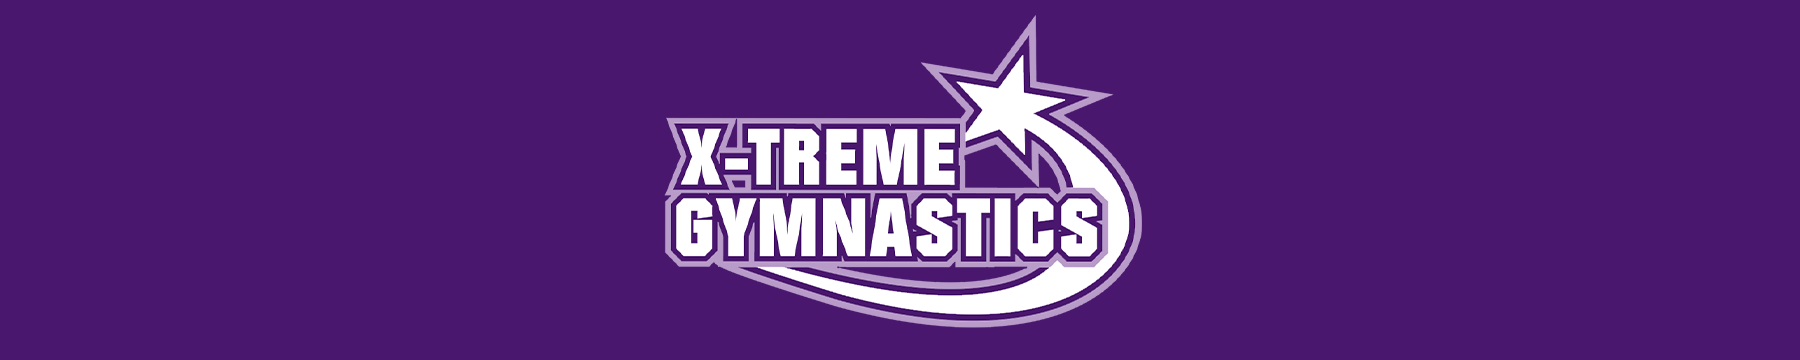 X-Treme Gymnastics